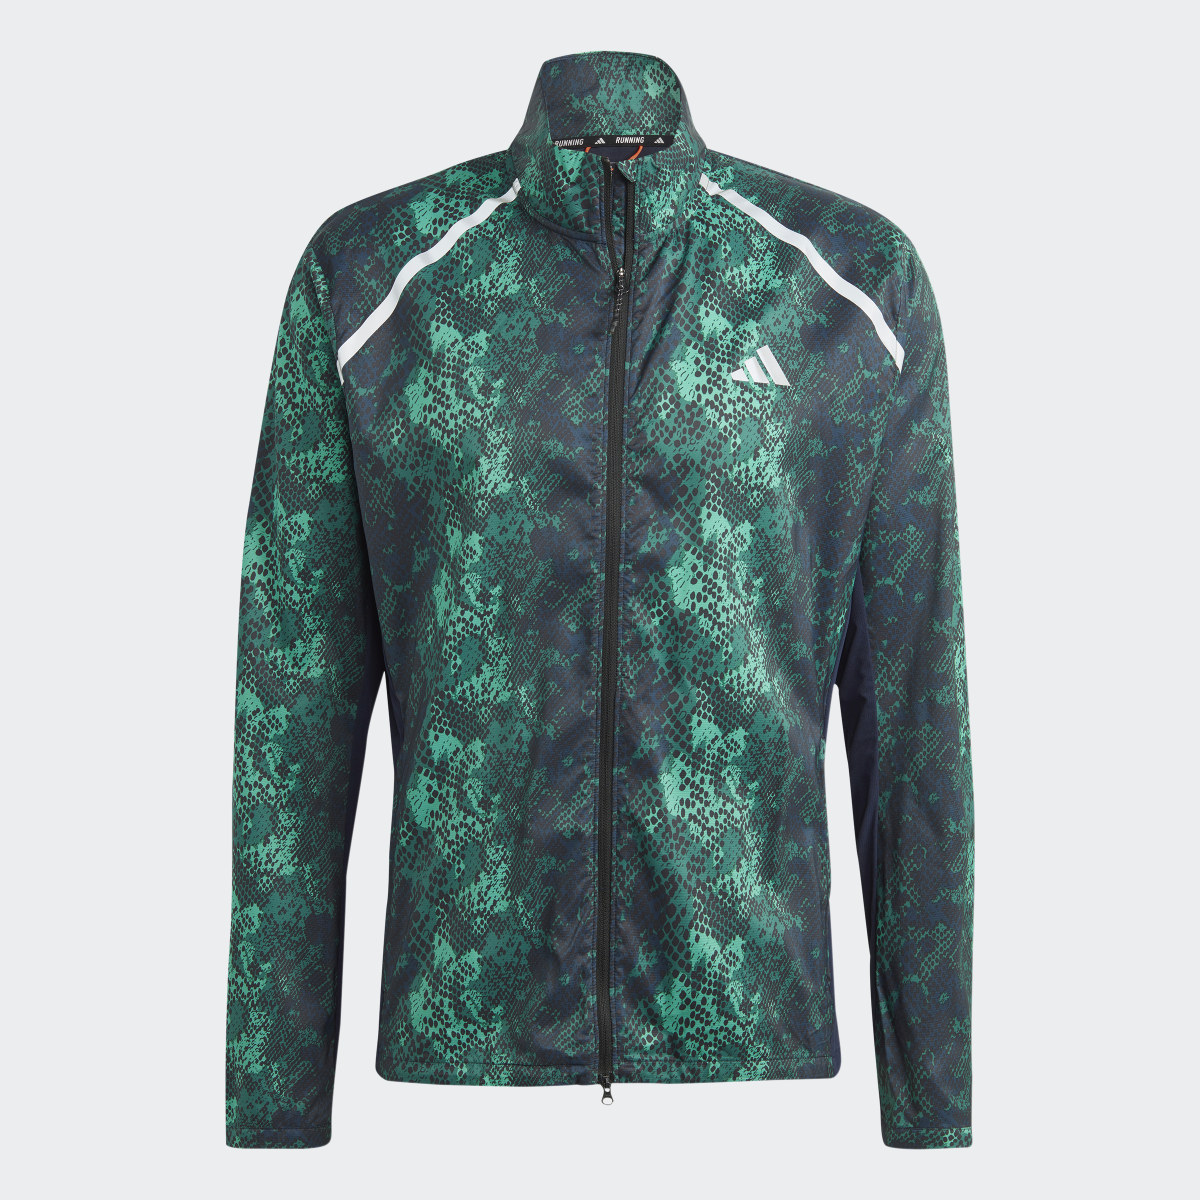 Adidas Allover Print Marathon Jacket. 5